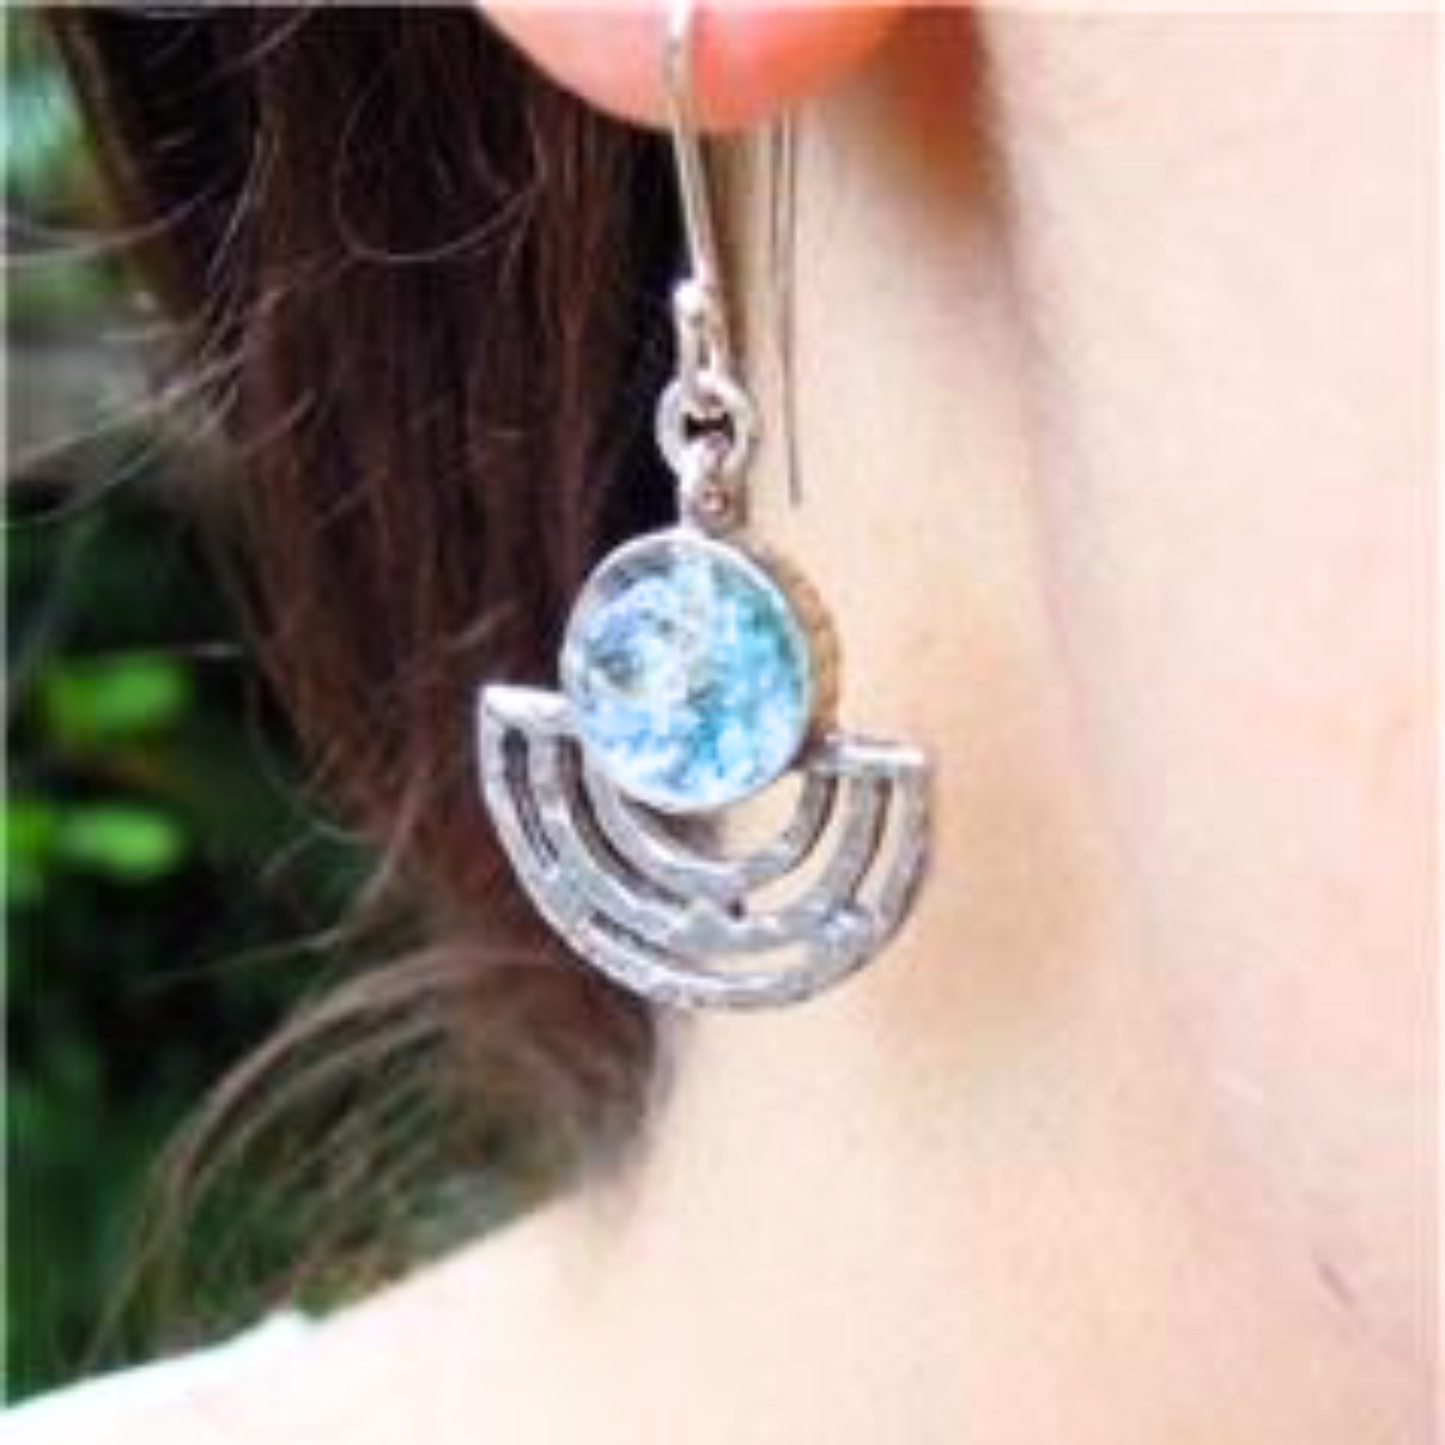 Roman Glass Earrings, Sterling Silver Earrings With Genuine Ancient Roman Glass